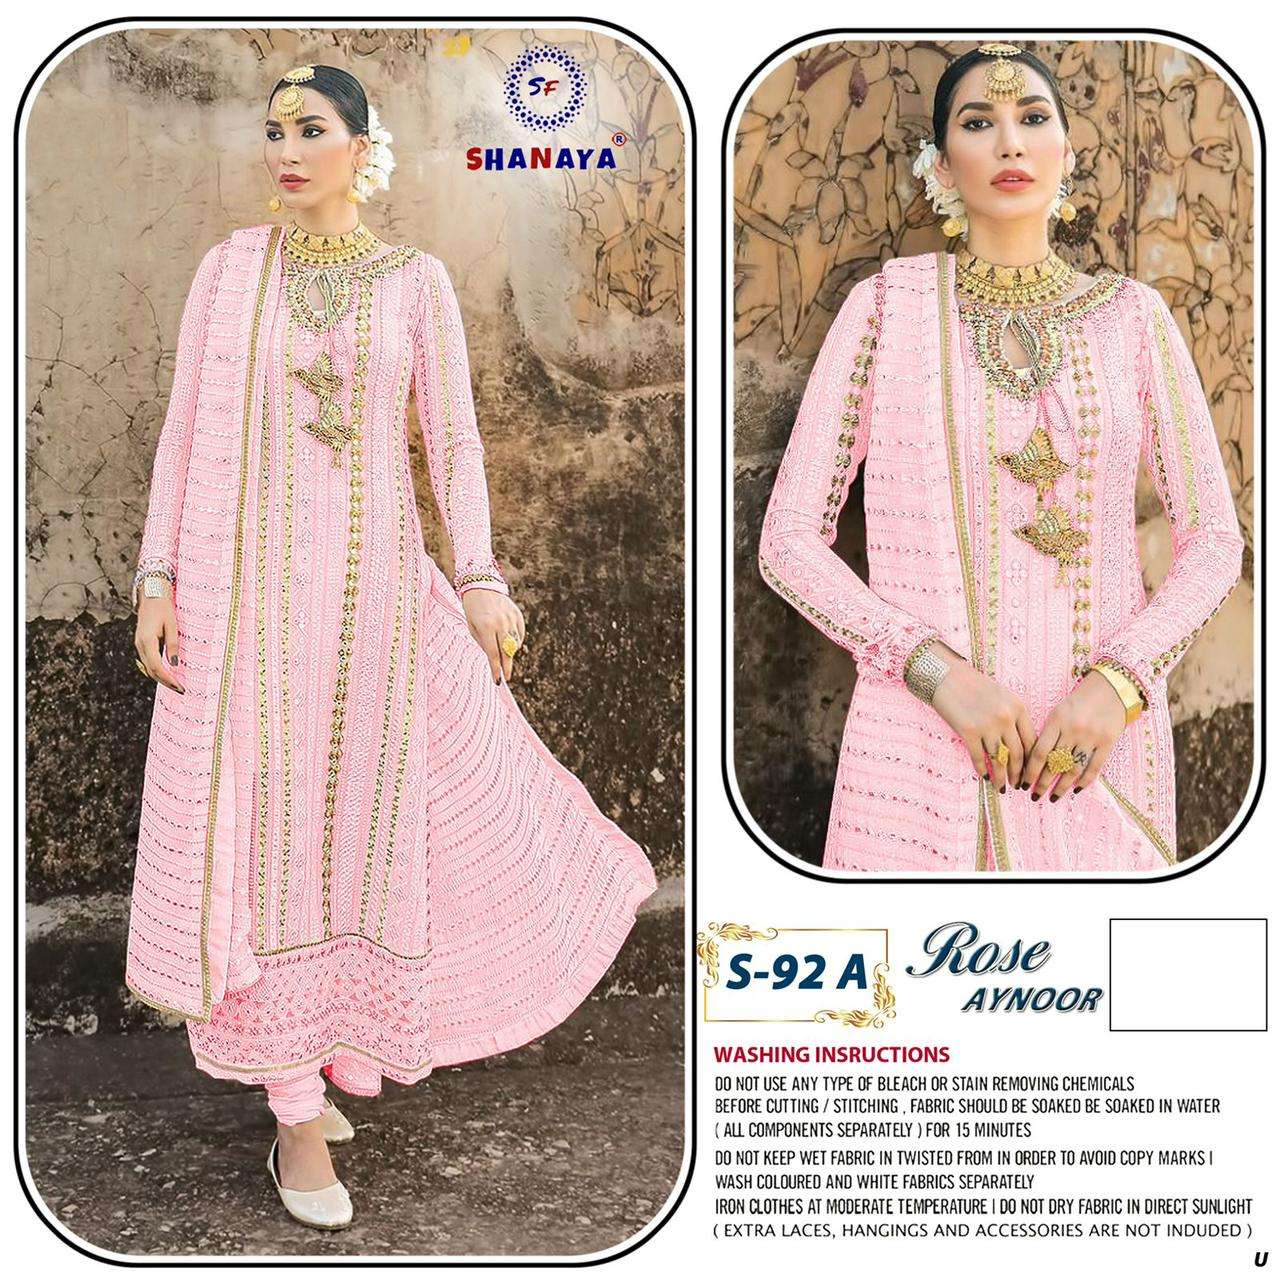 Shanaya Rose Aynooe S 92 Colors Fancy Pakistani Suit New Designs